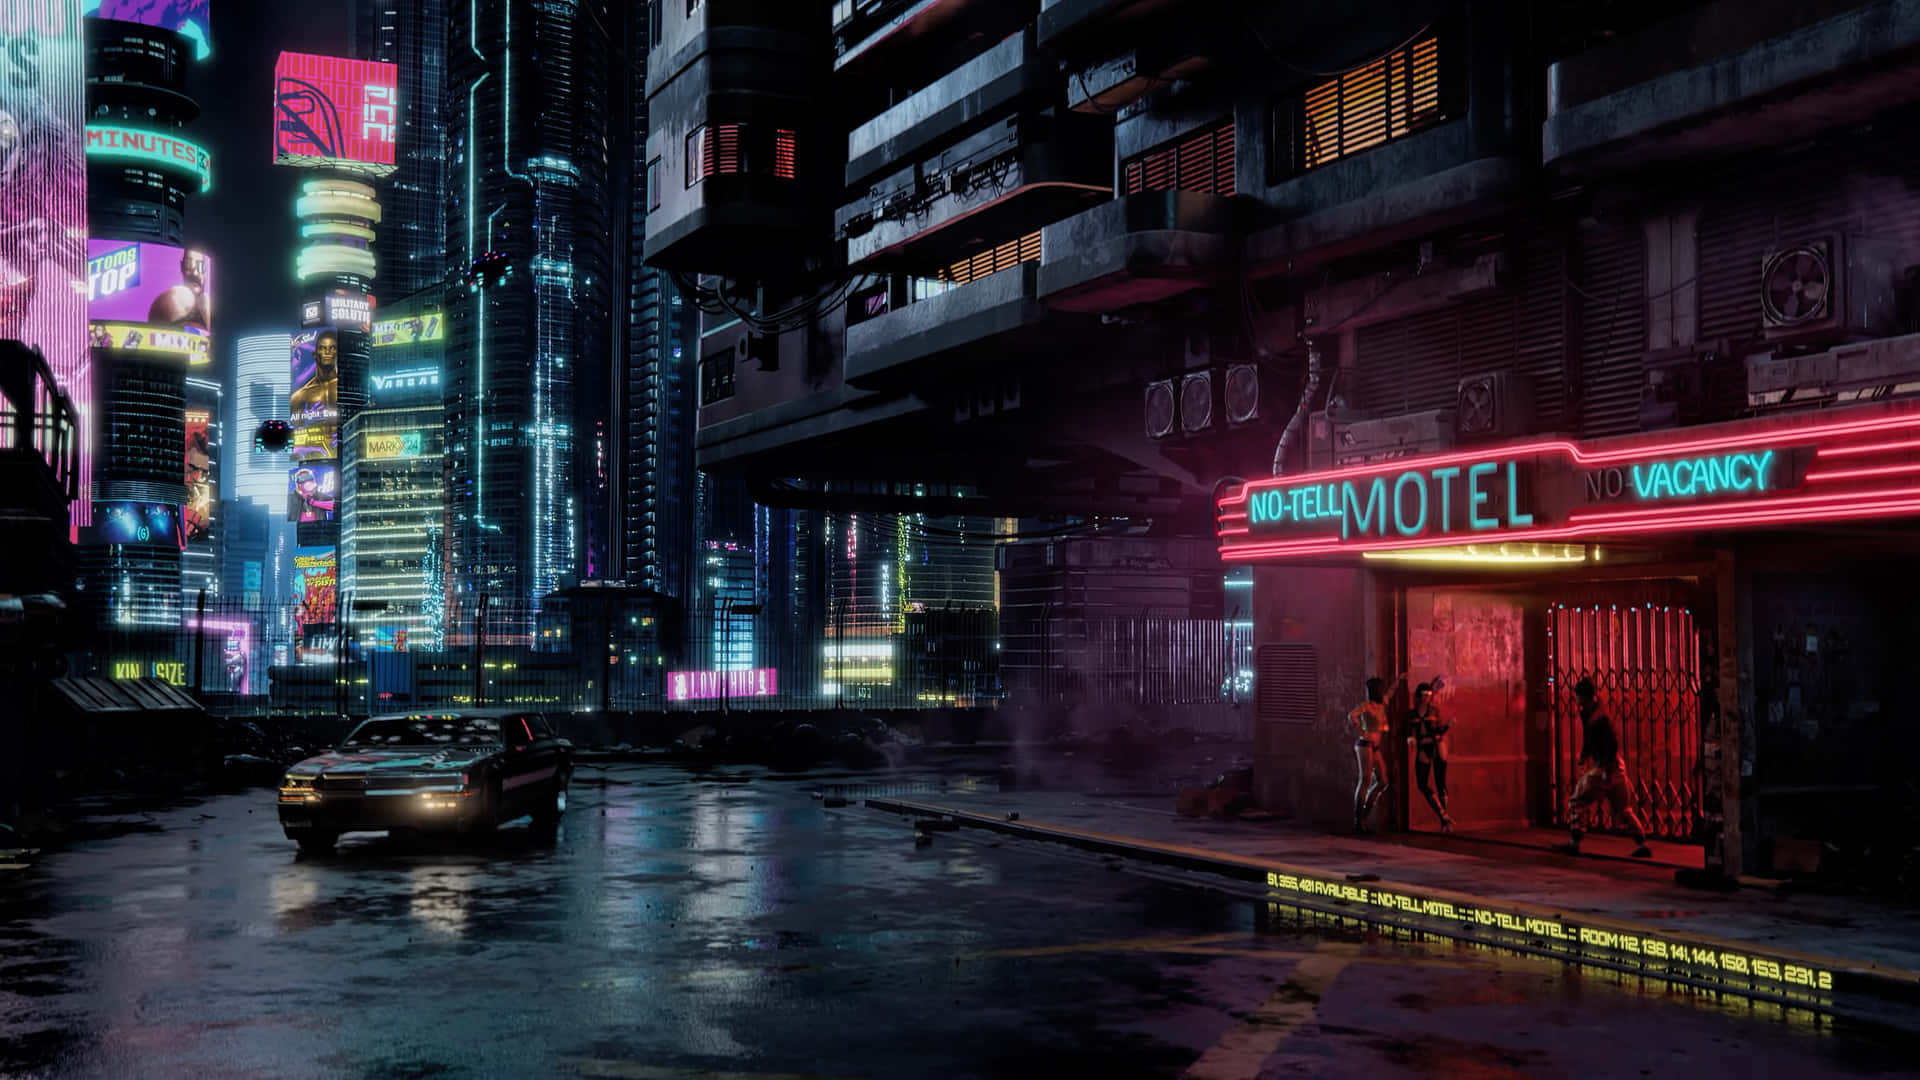 Download Night City Megalopolis Cyberpunk 2077 Iphone Wallpaper | Wallpapers .com